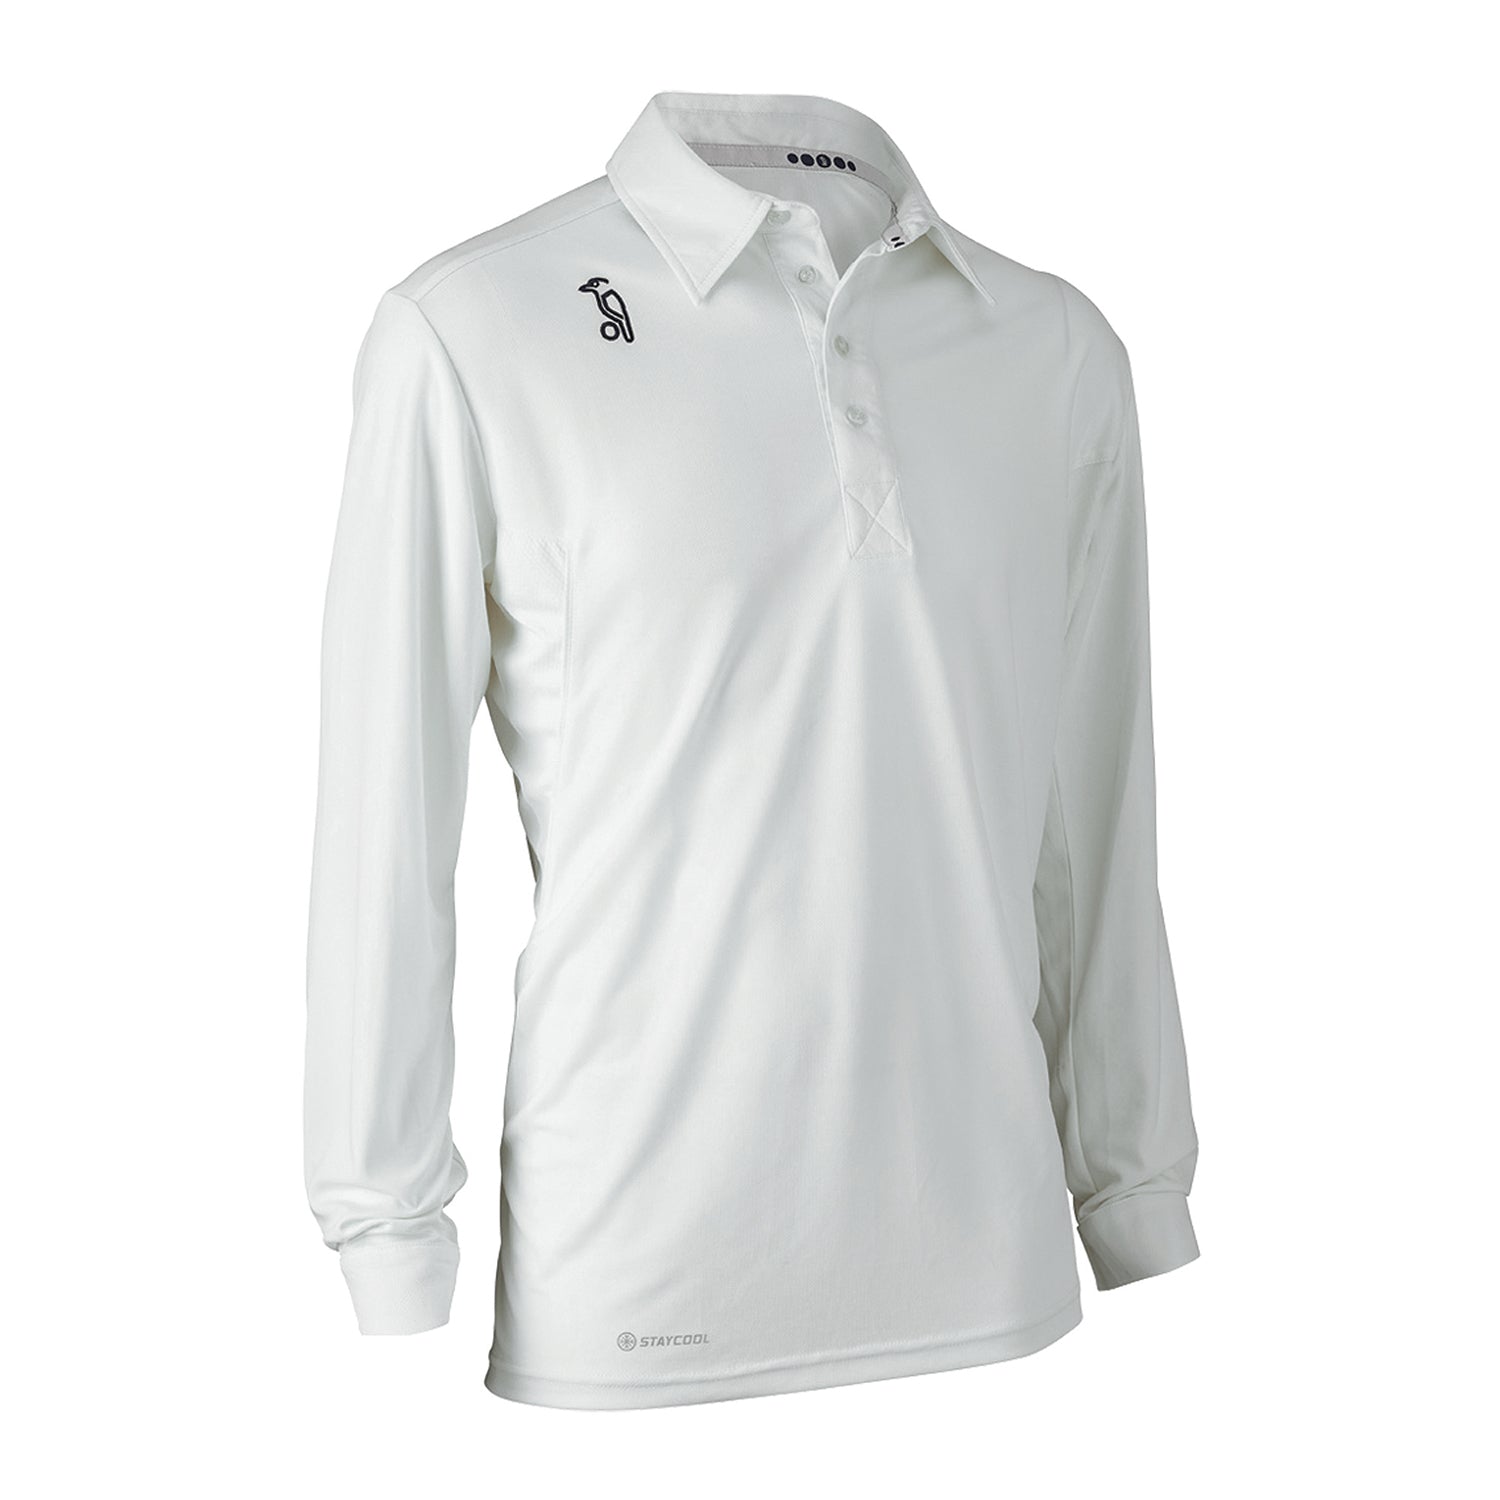 Kookaburra Pro Active Long Sleeve White Cricket Shirt